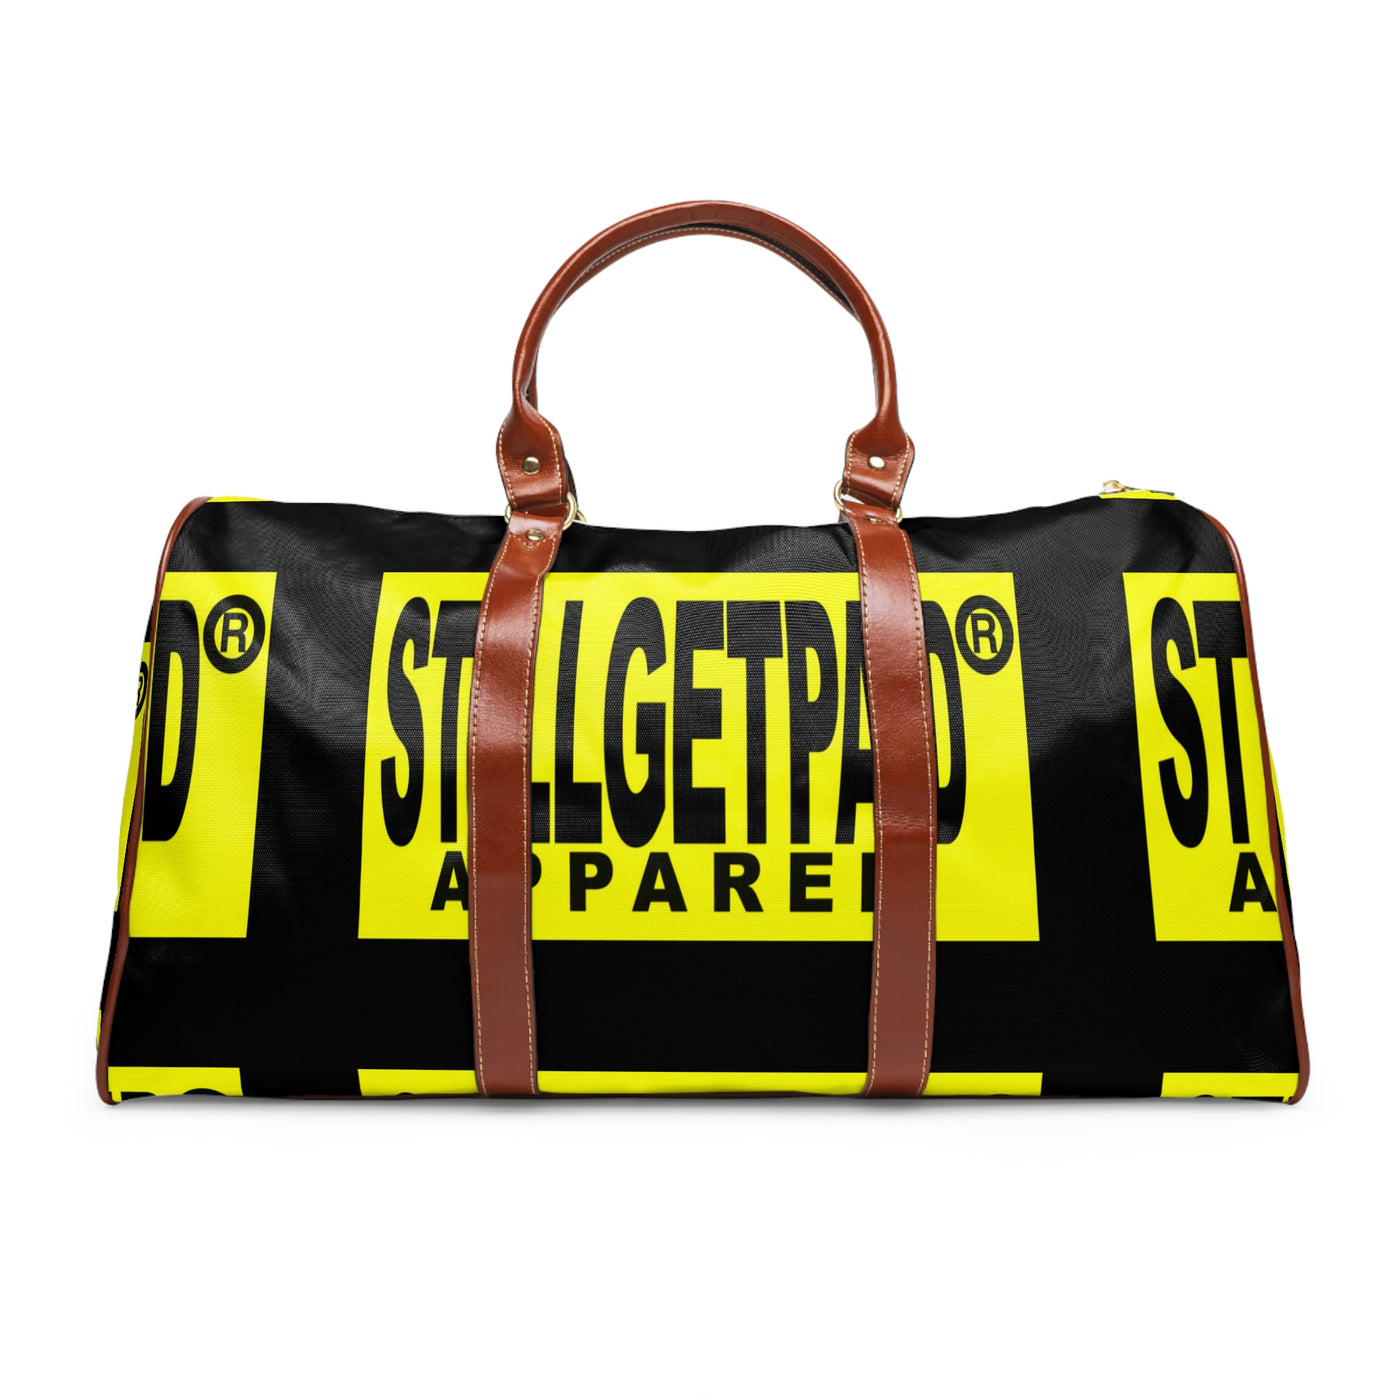 STILLGETPAID® APPAREL Waterproof Travel Bag